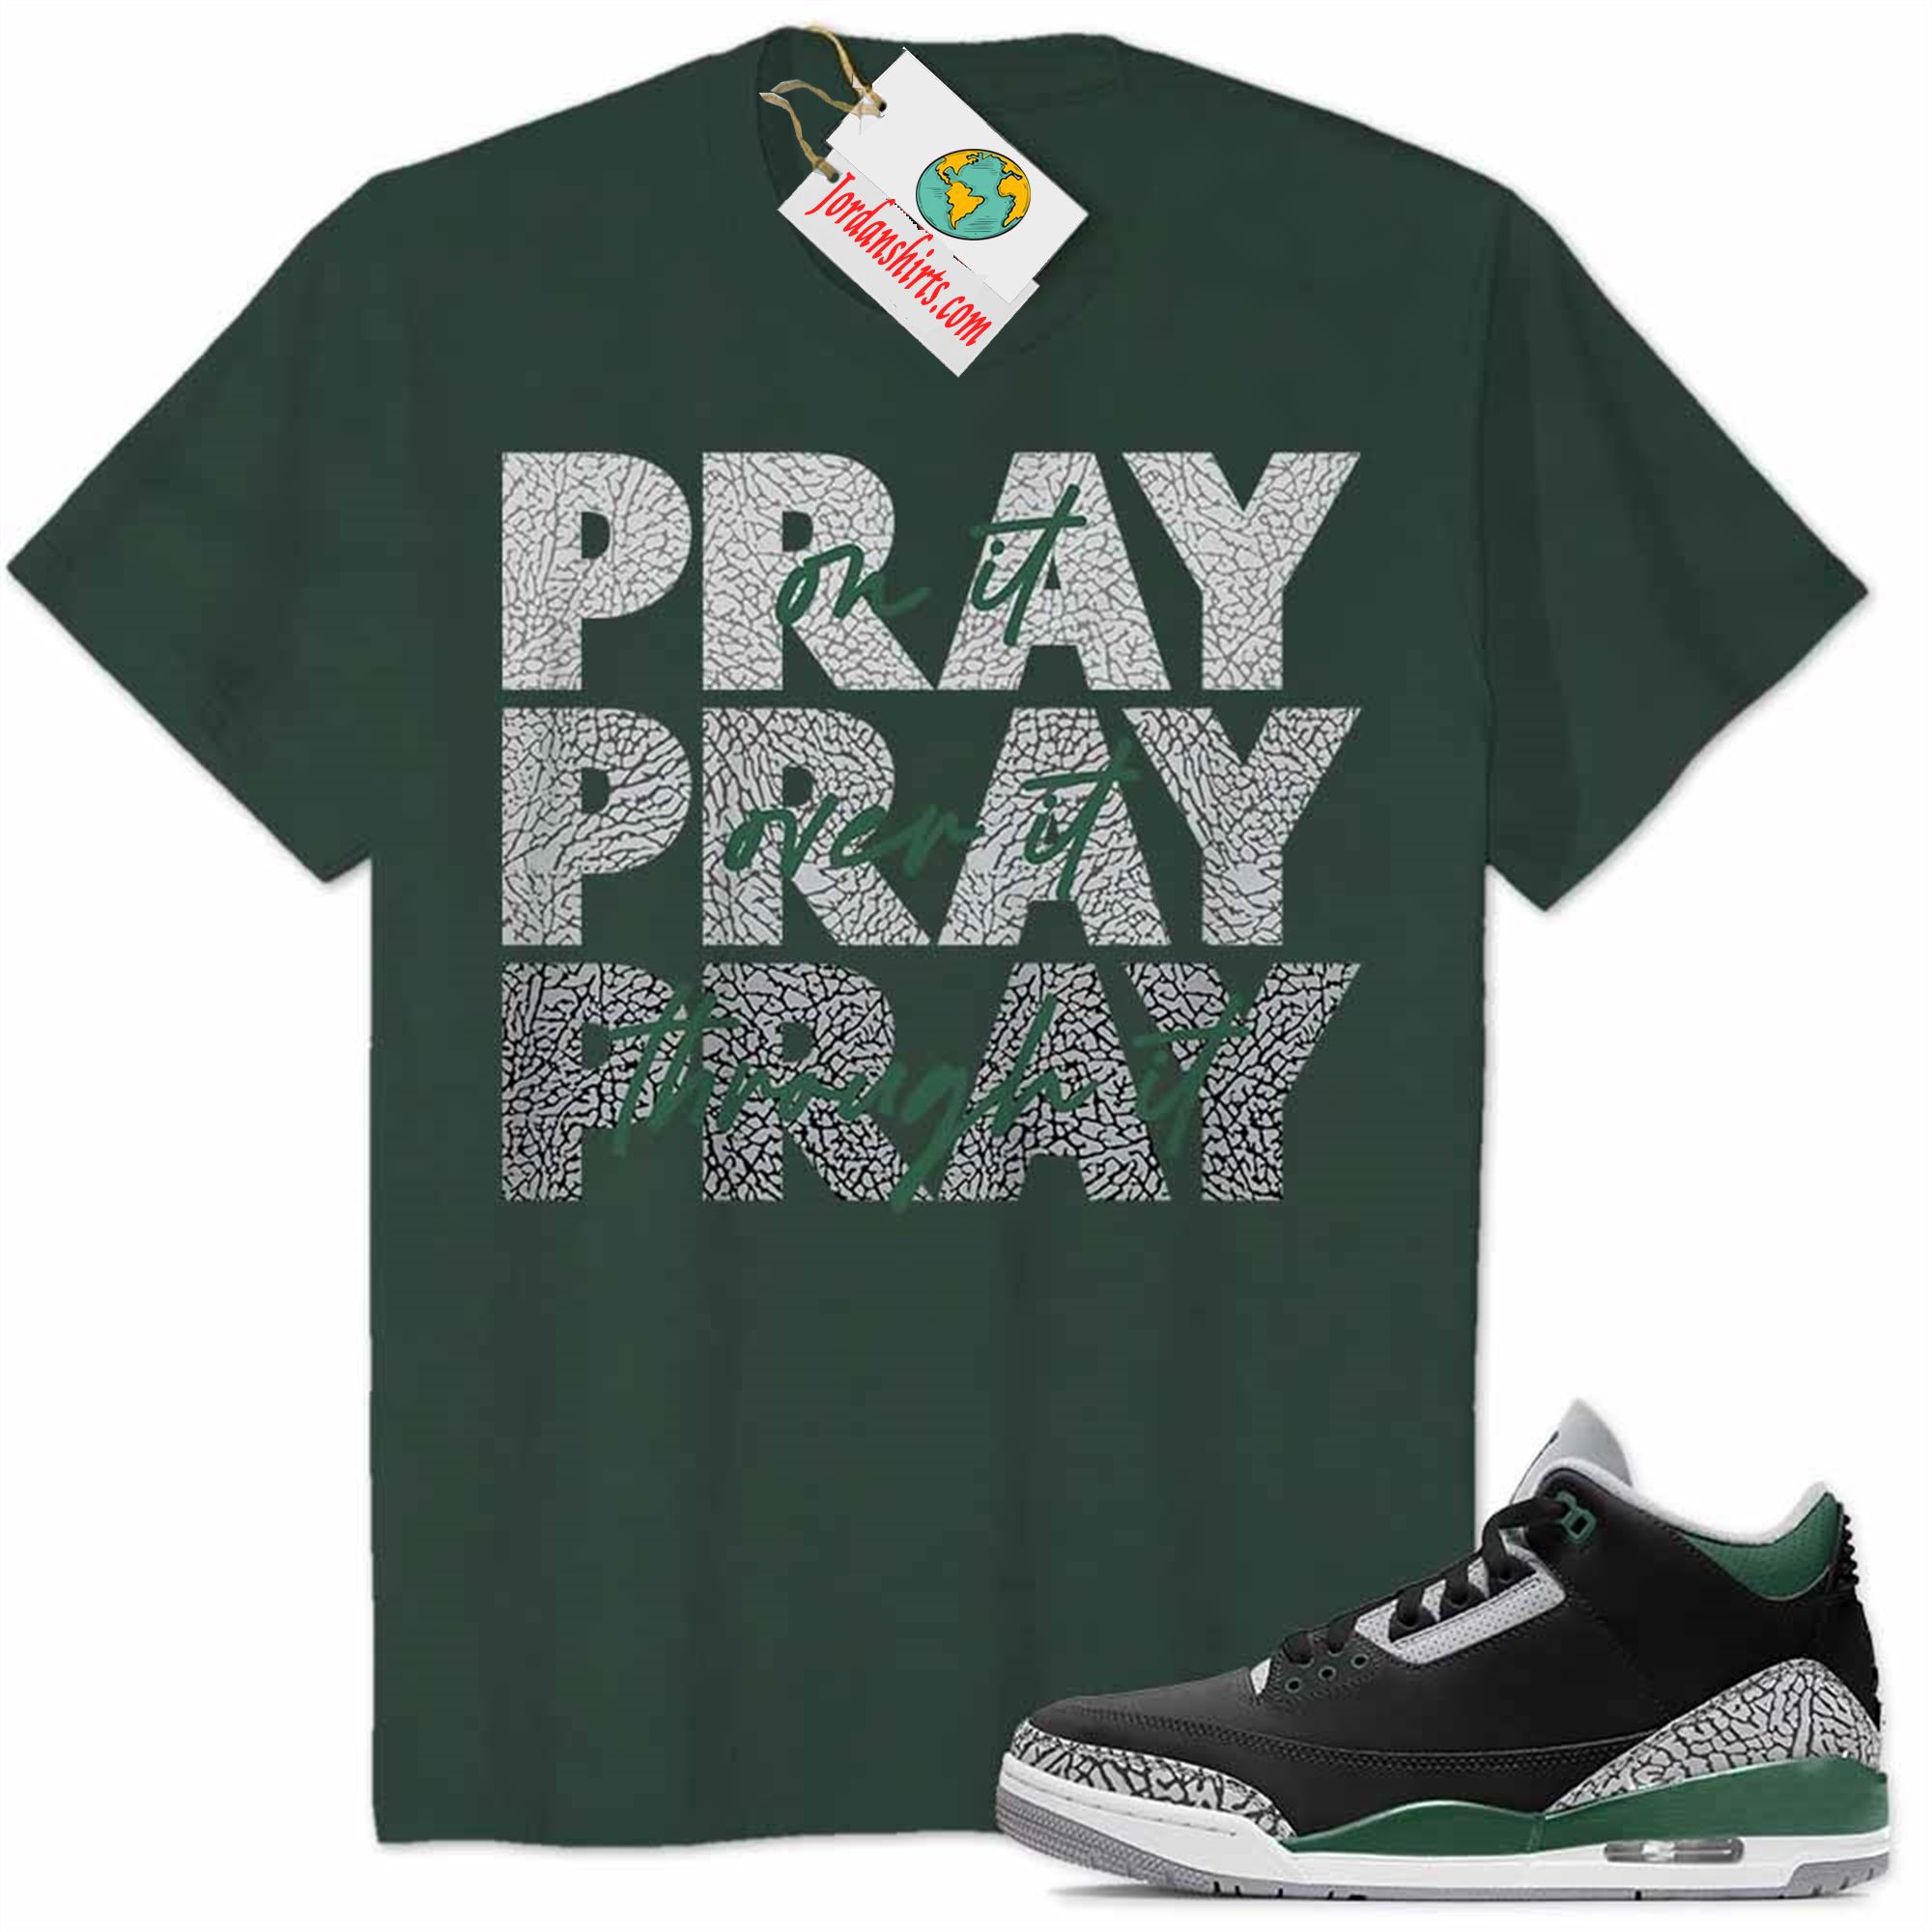 Jordan 3 Shirt, Pray On It Pray Over It Pray Through It Forest Air Jordan 3 Pine Green 3s Full Size Up To 5xl